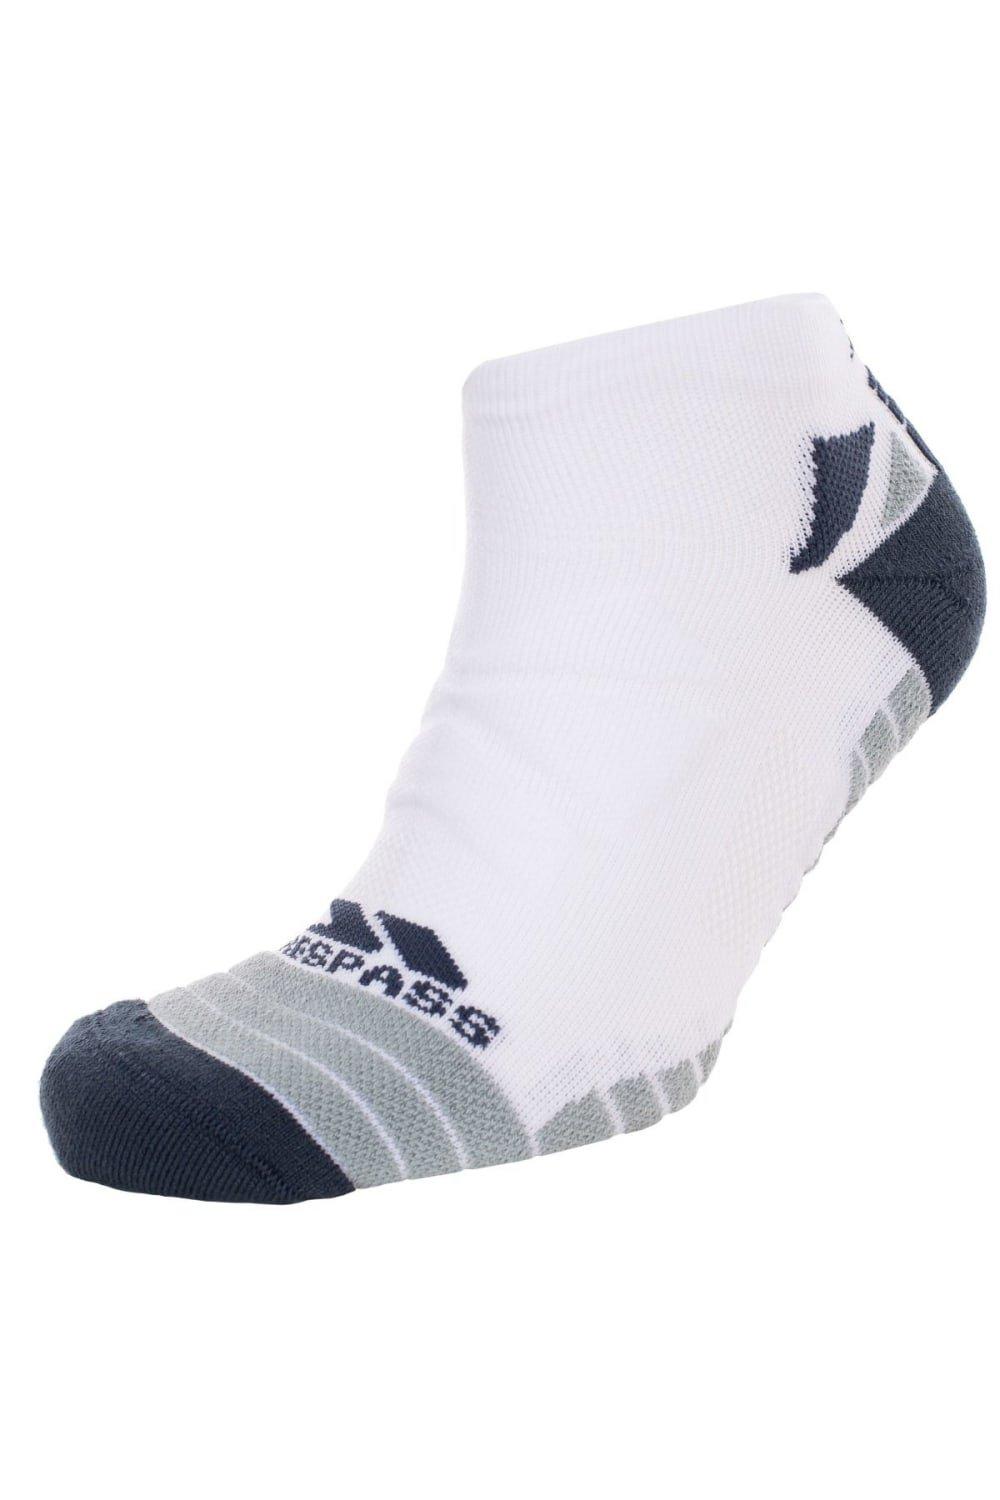 Elevation Sports Socks